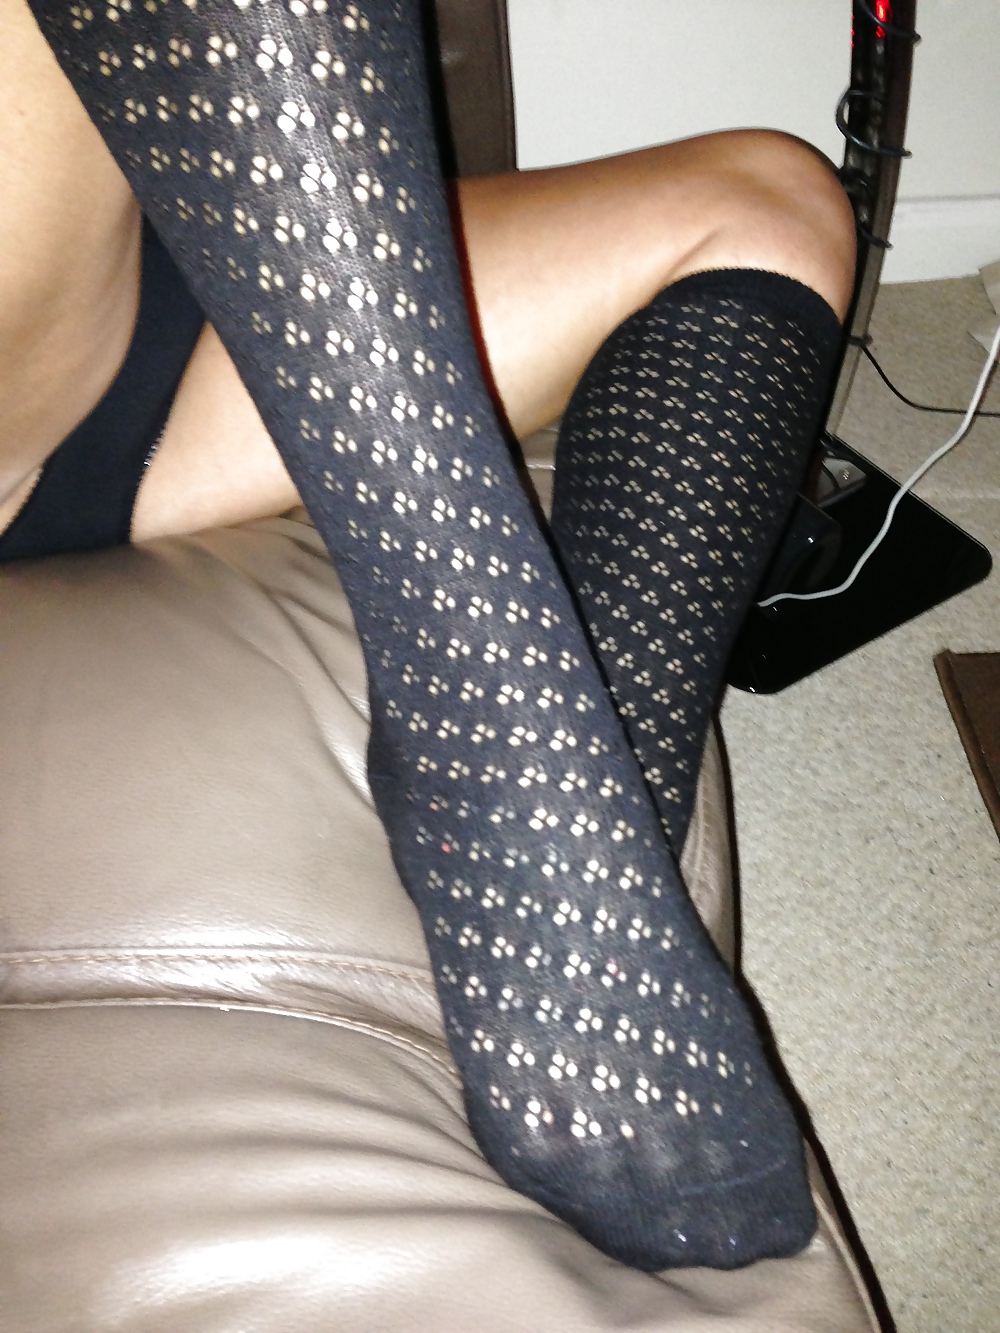 Sex jayne in sexy knee high socks b4 sally69 cam fun image